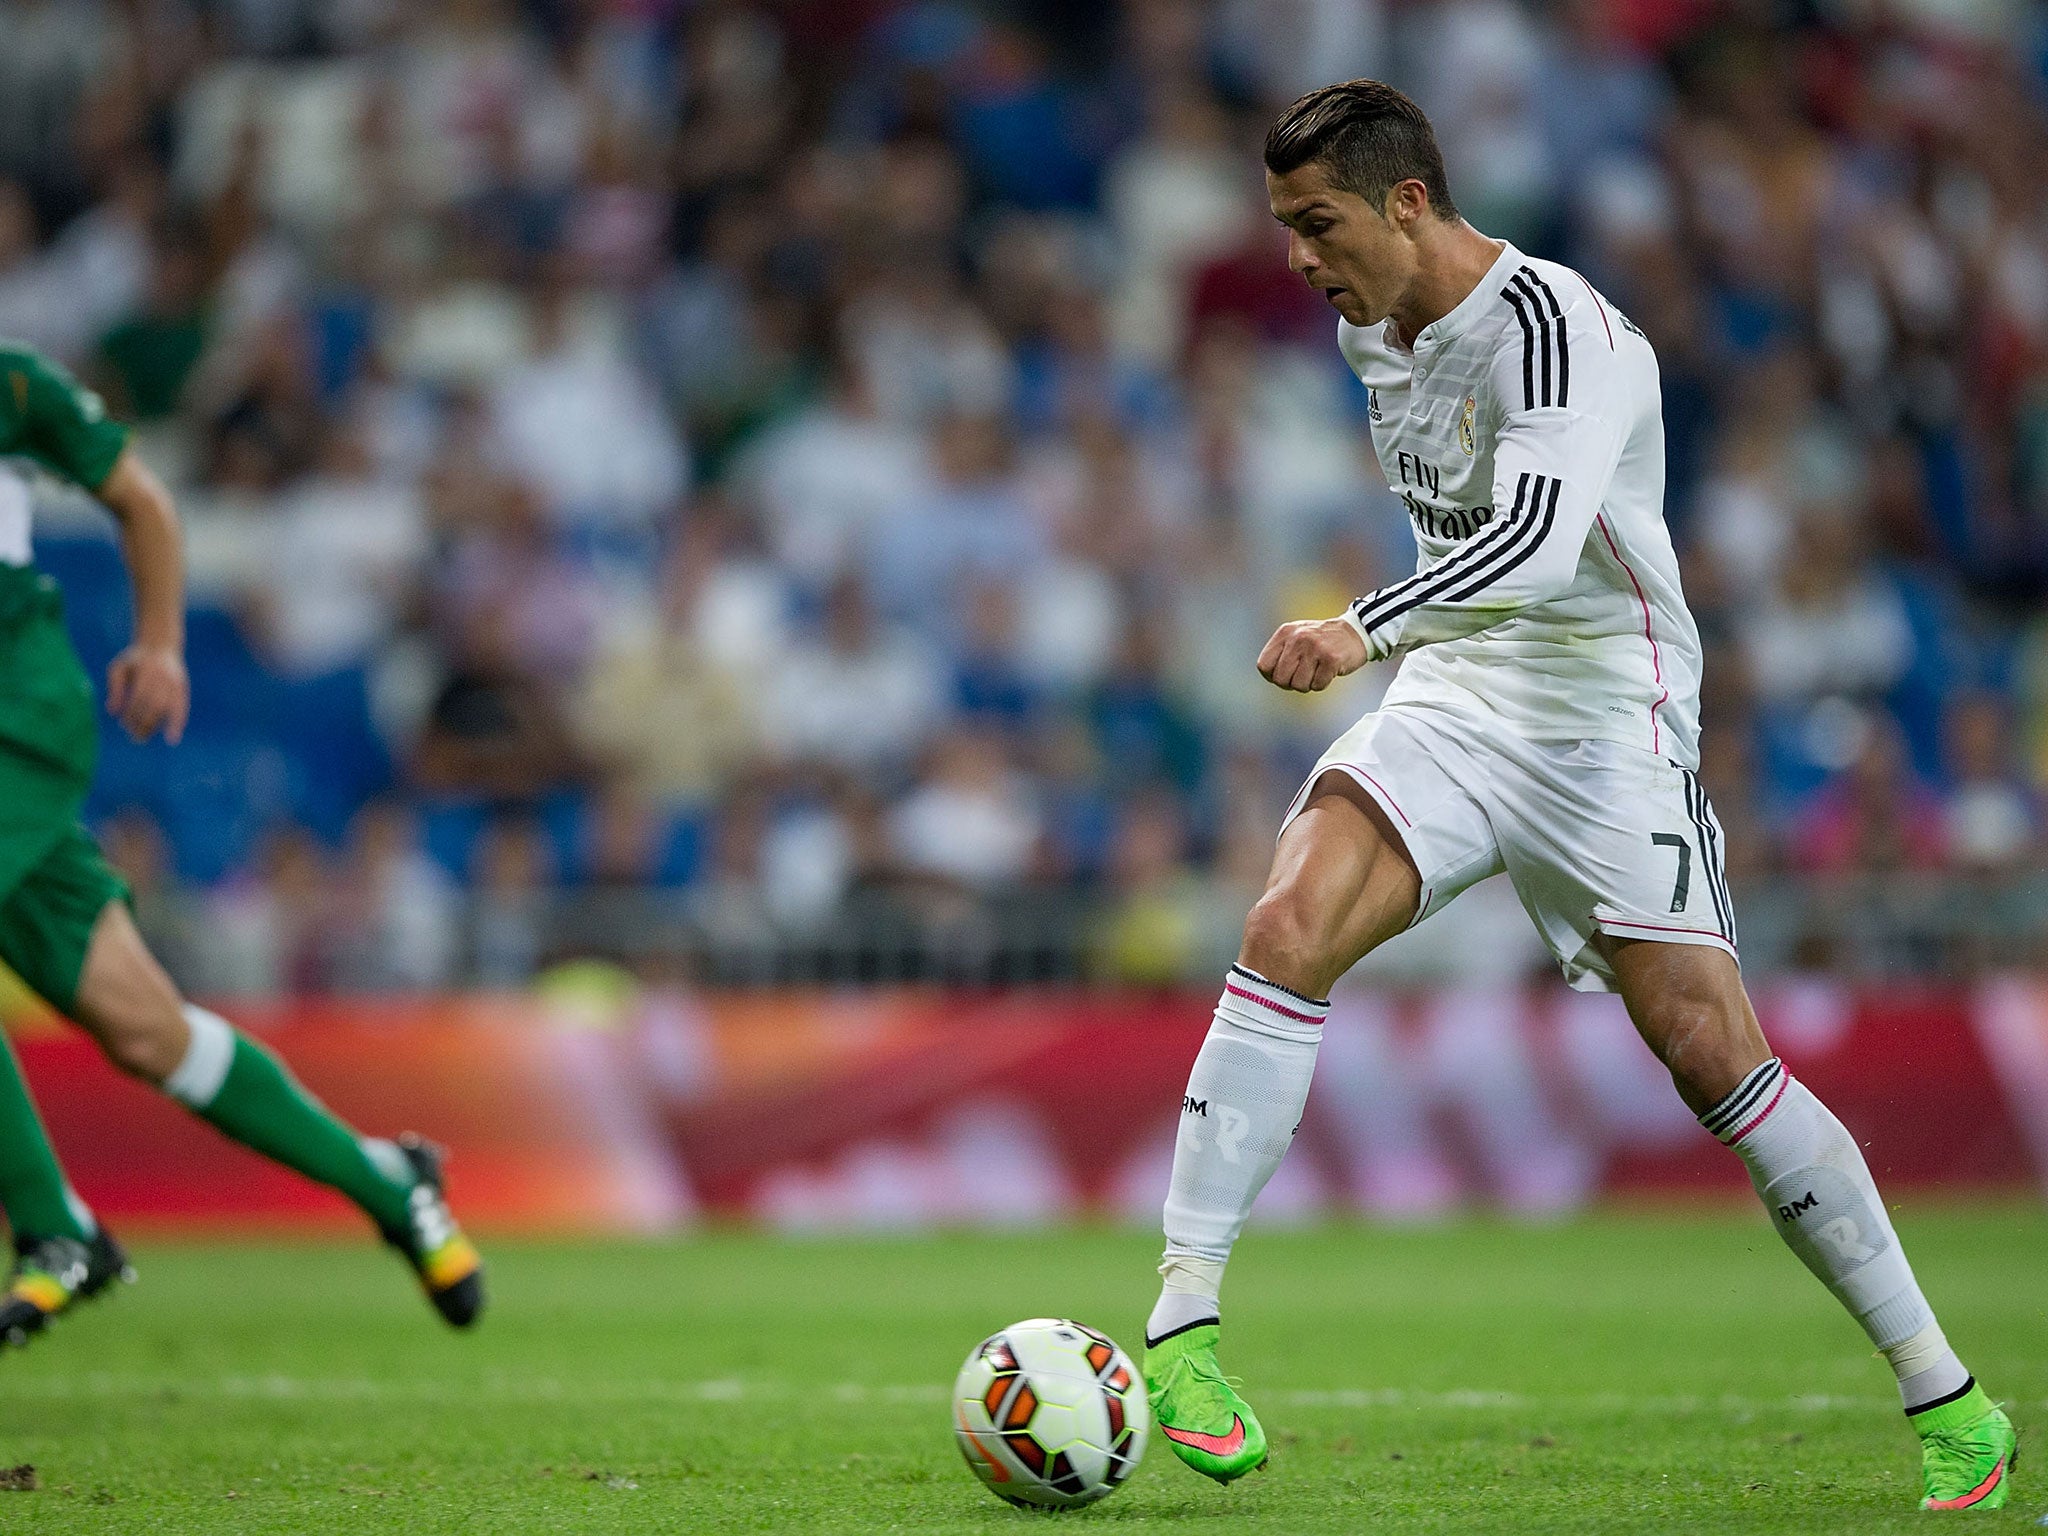 Cristiano Ronaldo scores for Real Madrid against Elche last night